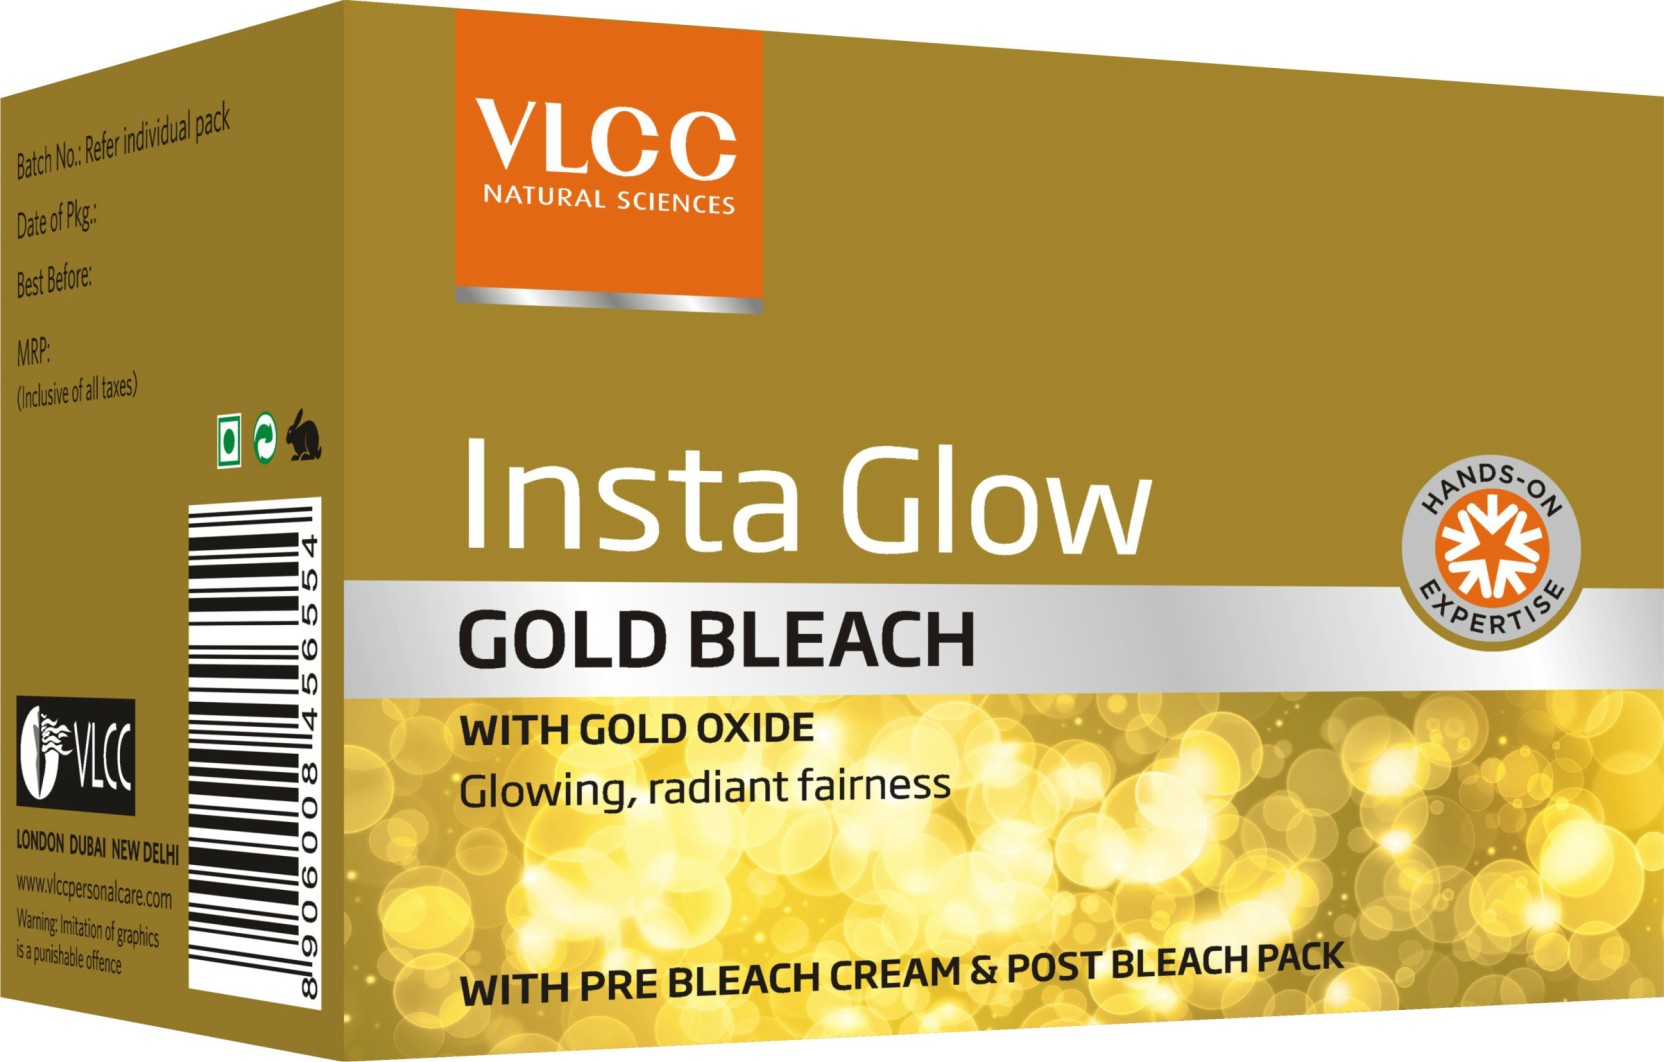 VLCC Insta Glow Gold Bleach